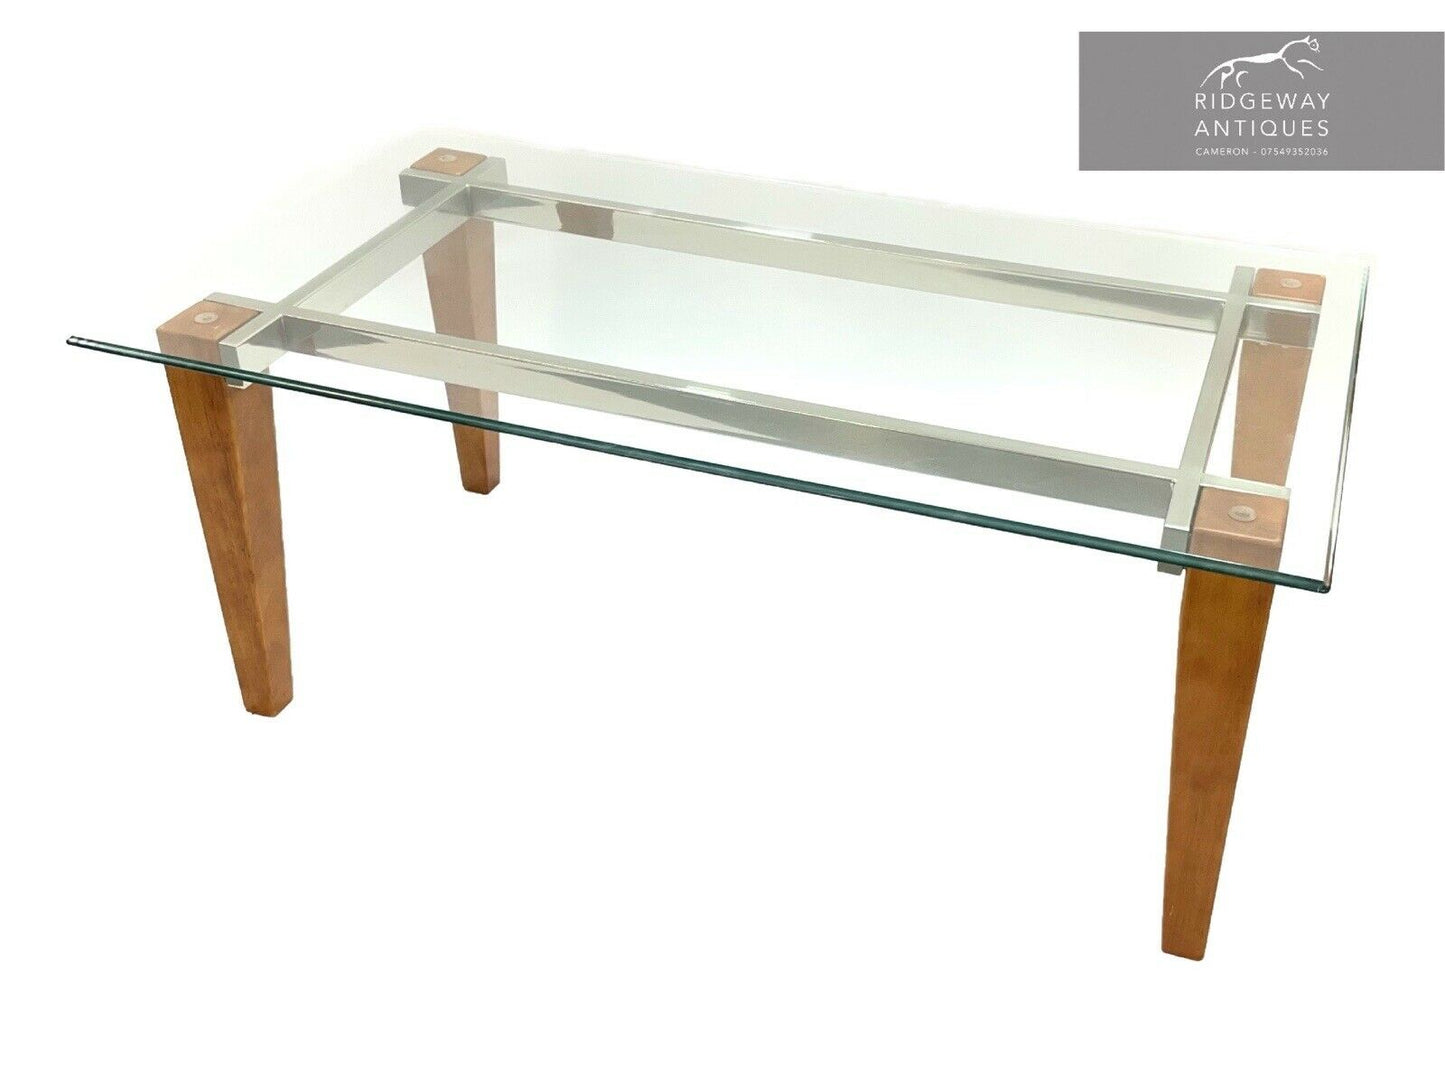 A Modern, Teak, Chrome & Glass Coffee Table